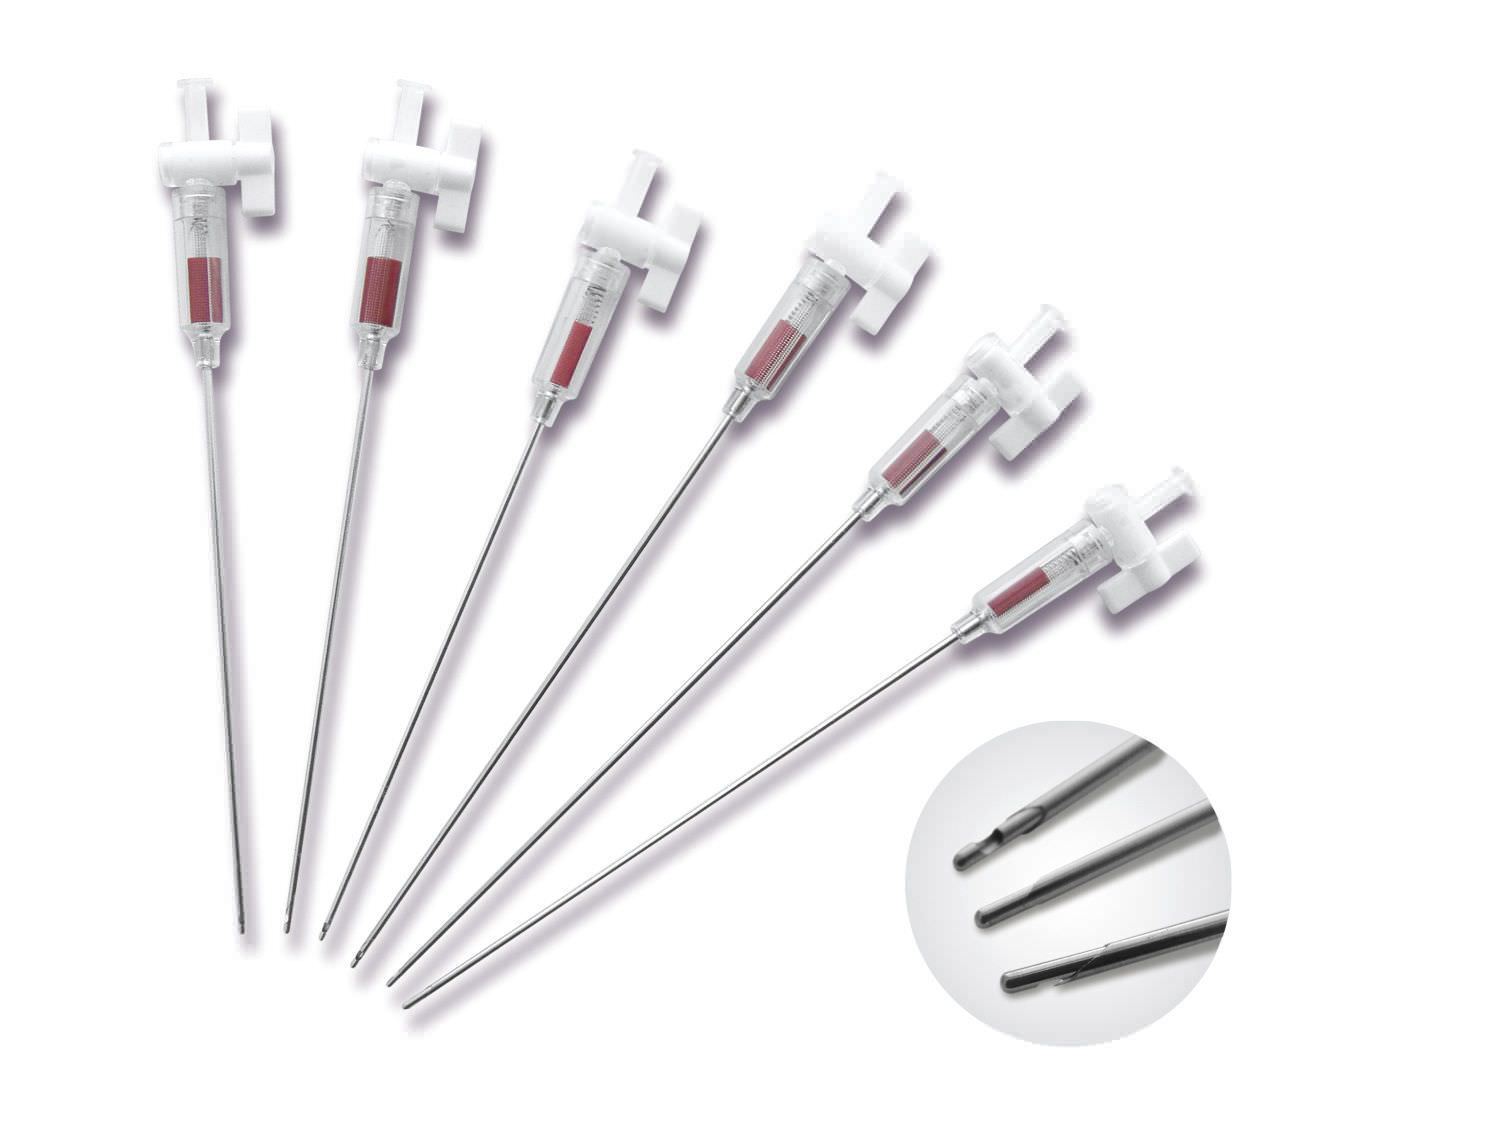 Laparoscopic insufflation needle / Veress MND11200, MND11500 Unimicro Medical Systems